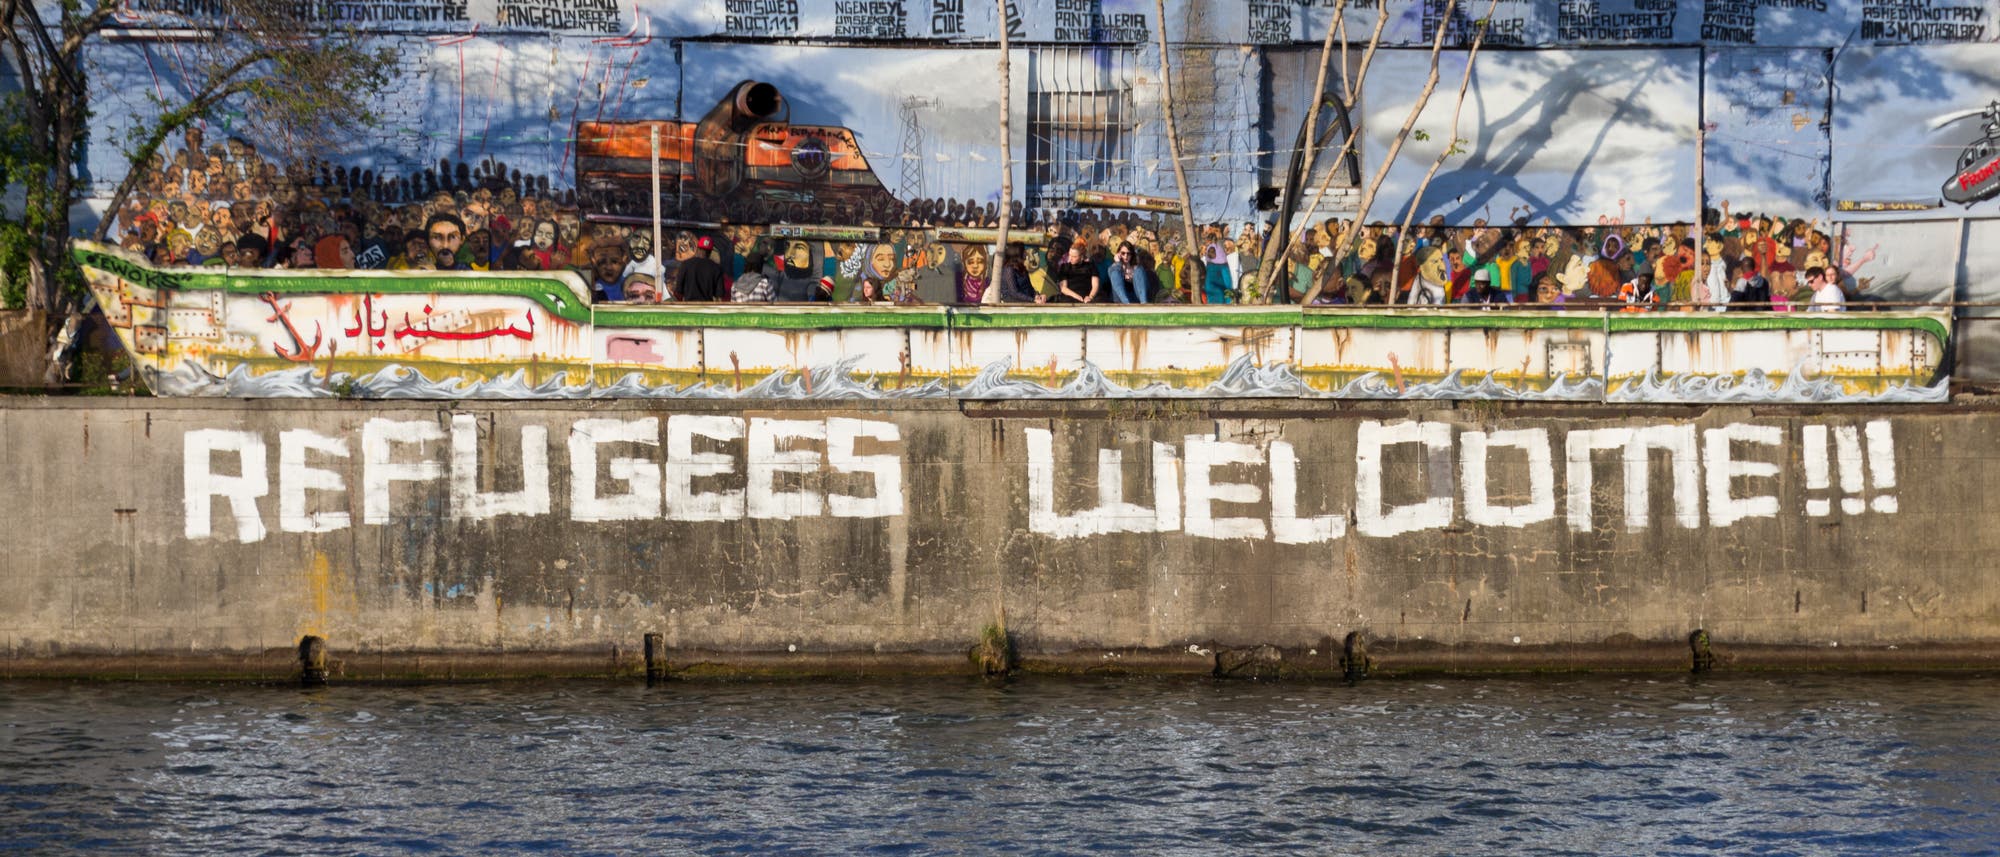 Graffiti Refugees welcome